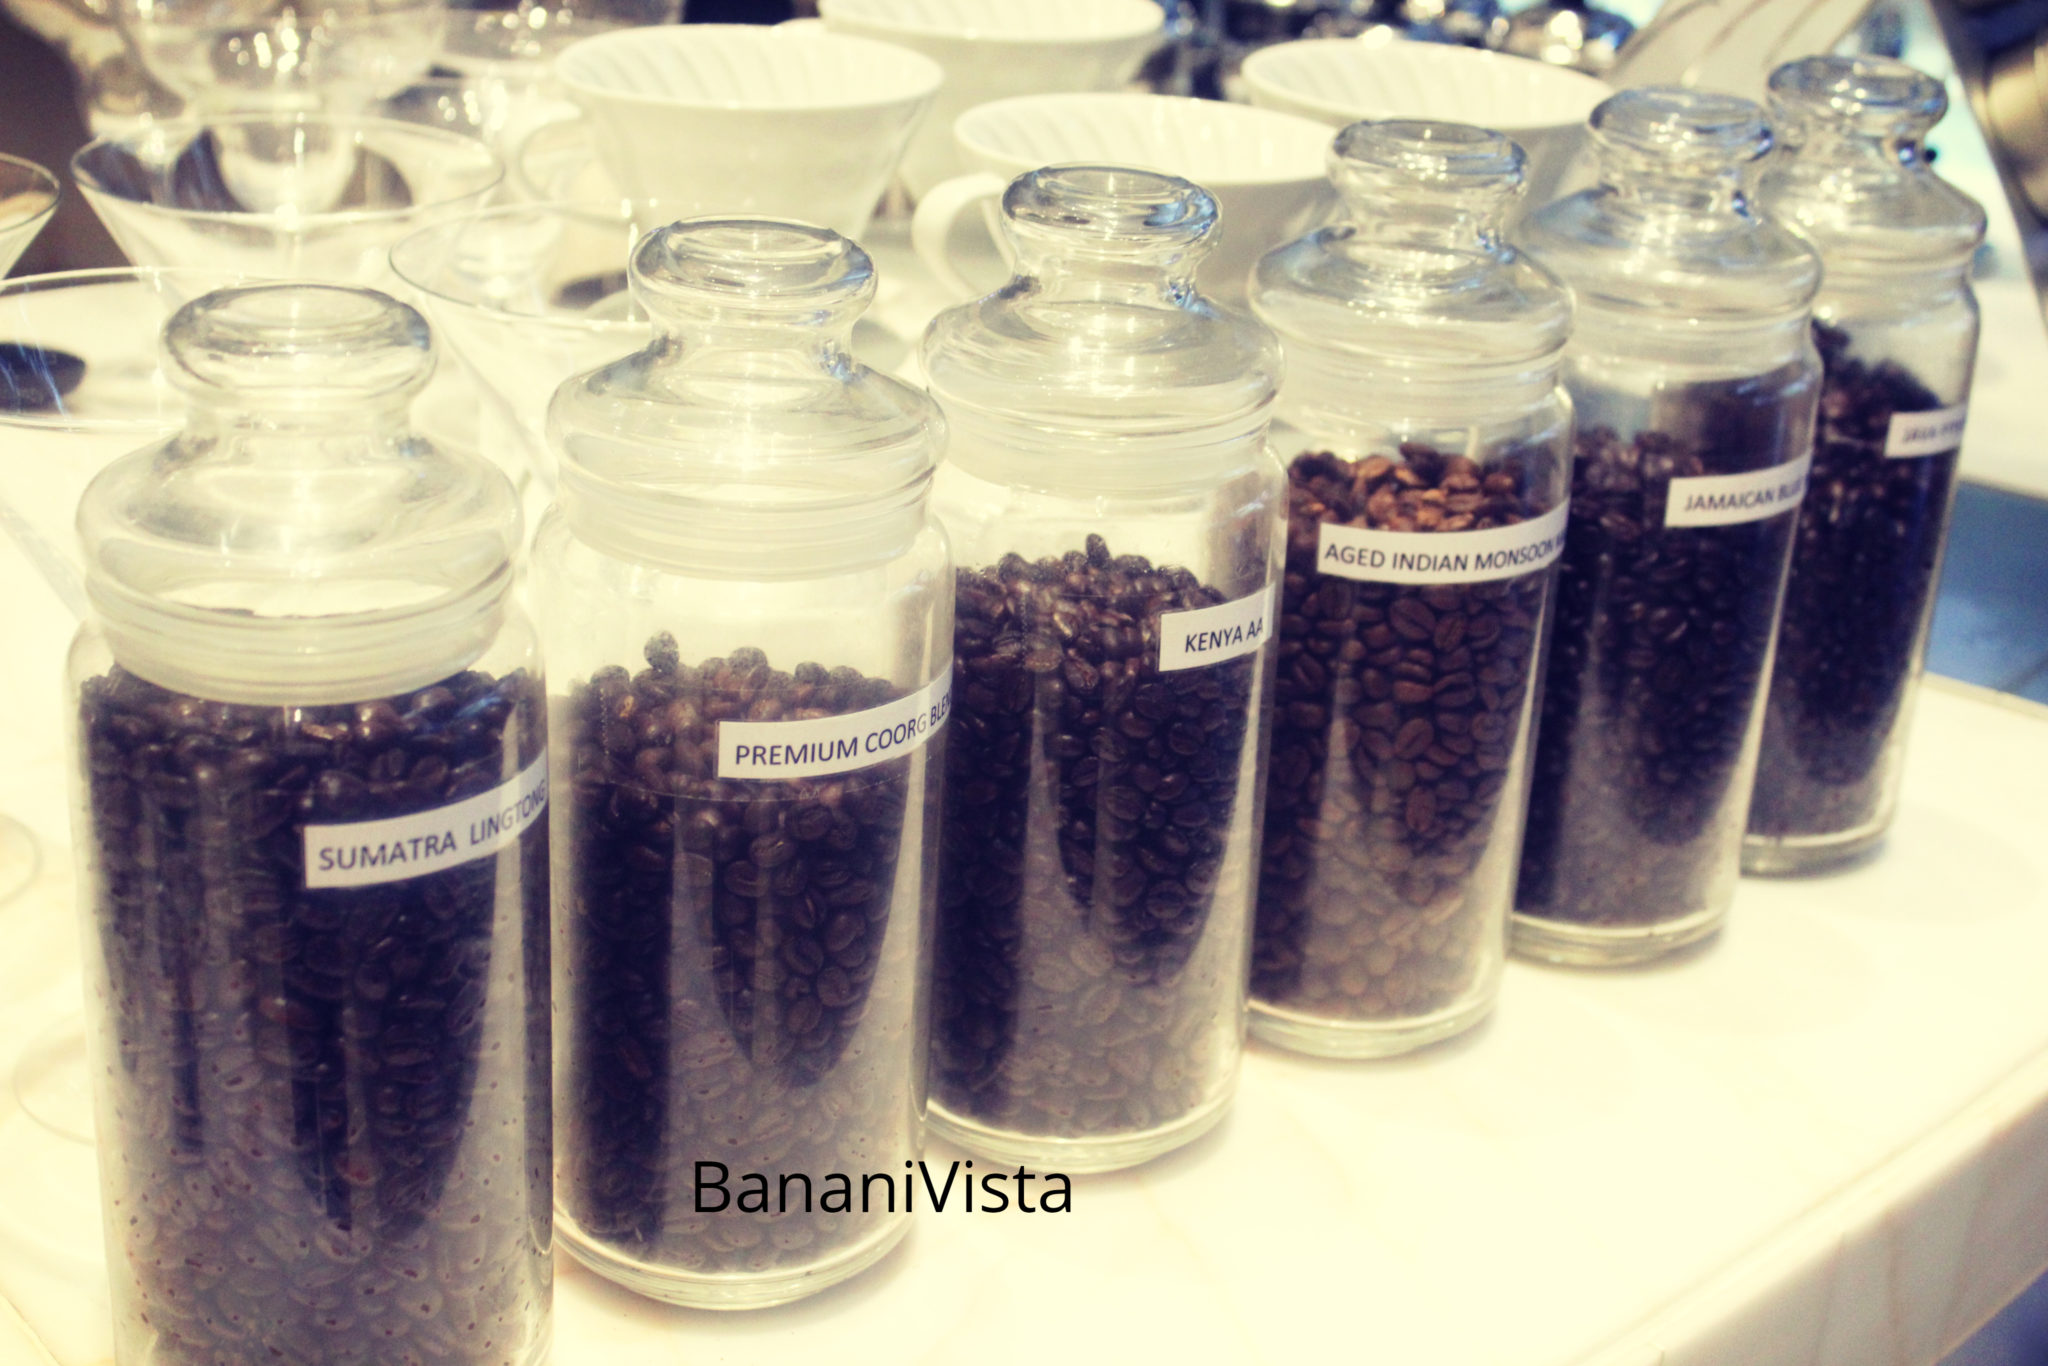 Select your coffee, BananiVista, Menu